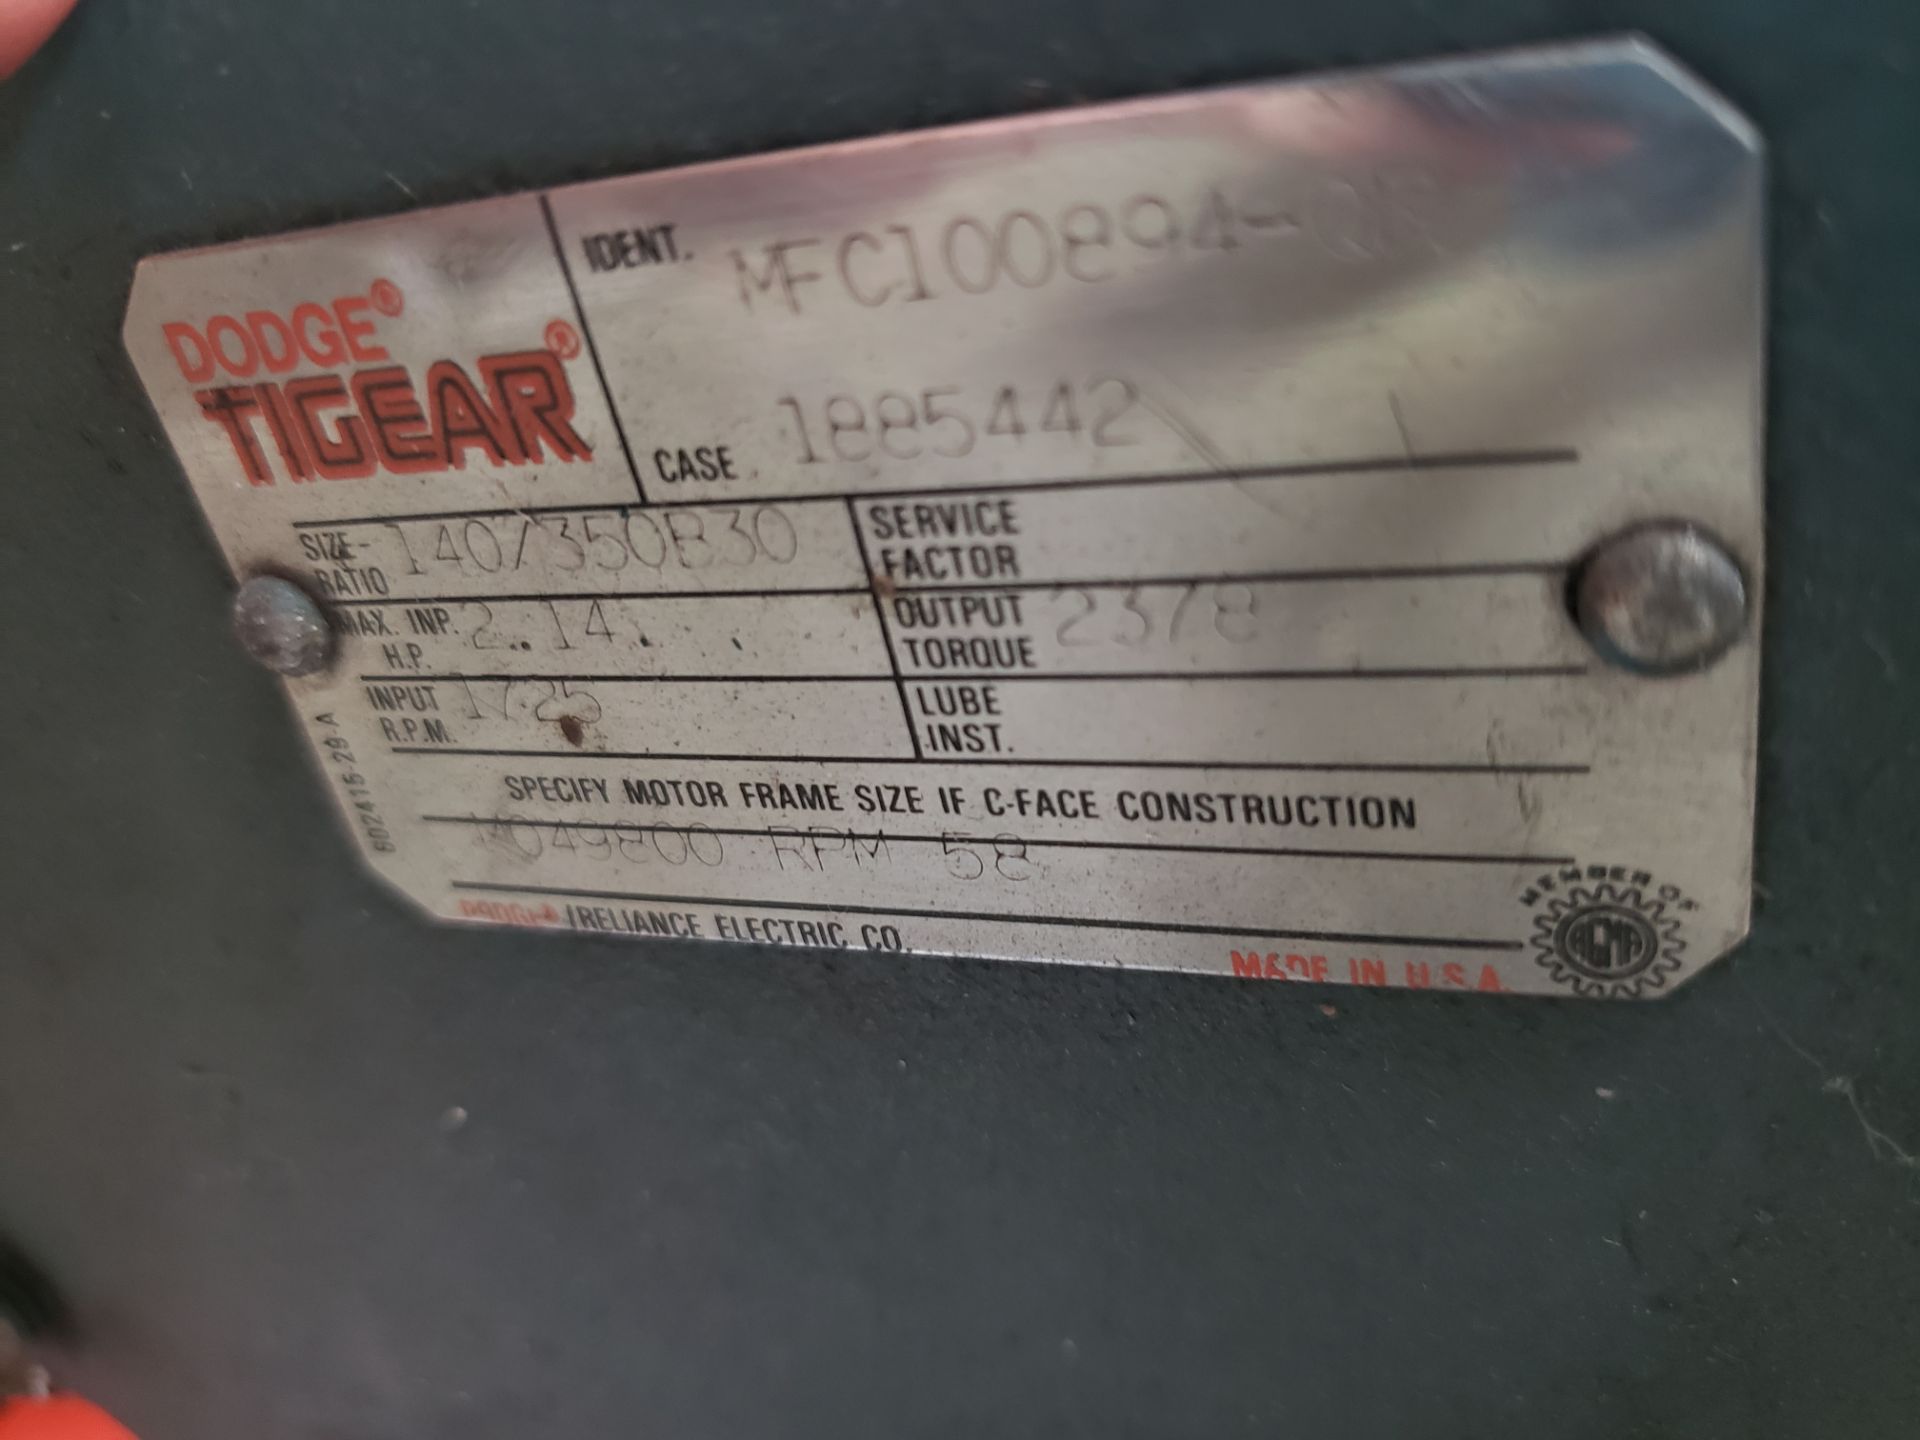 DODGE TIGEAR MFC100894-QR GEAR REDUCER - Image 5 of 5